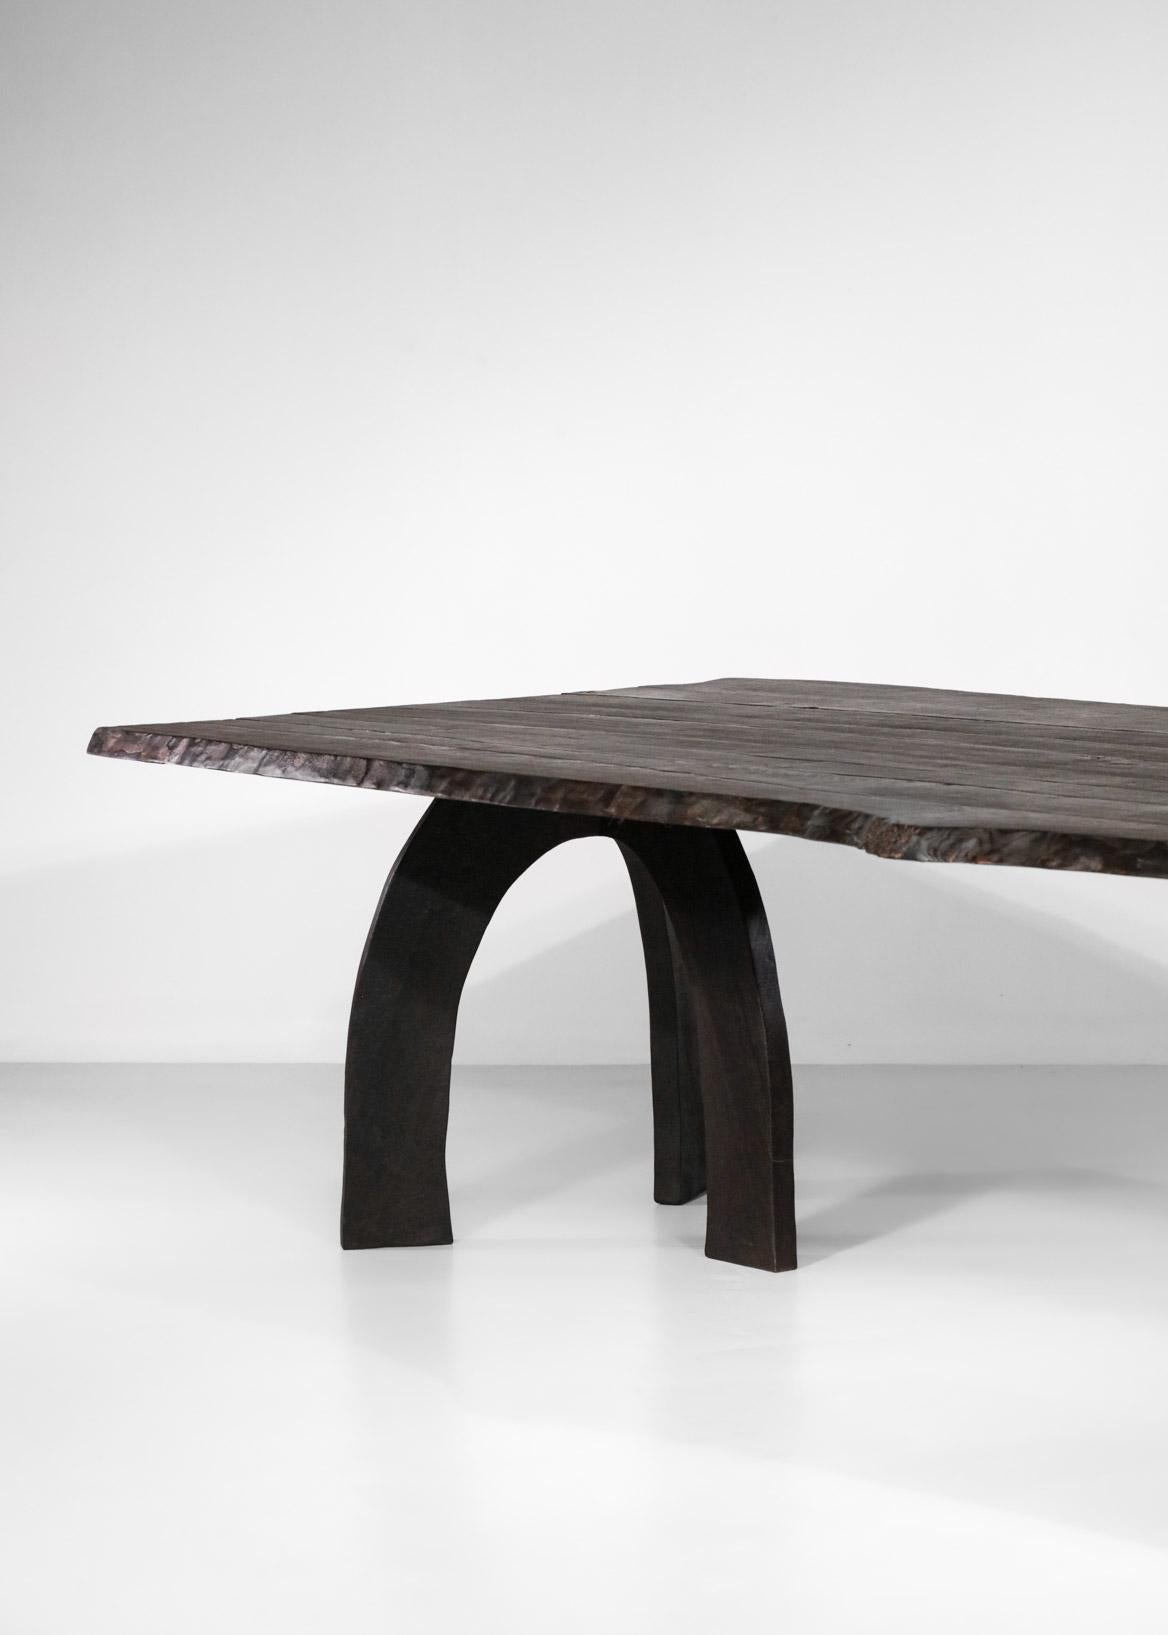 French Large Dining Table Vincent Vincent 80 20 Burnt Wood Organic Modern Design For Sale